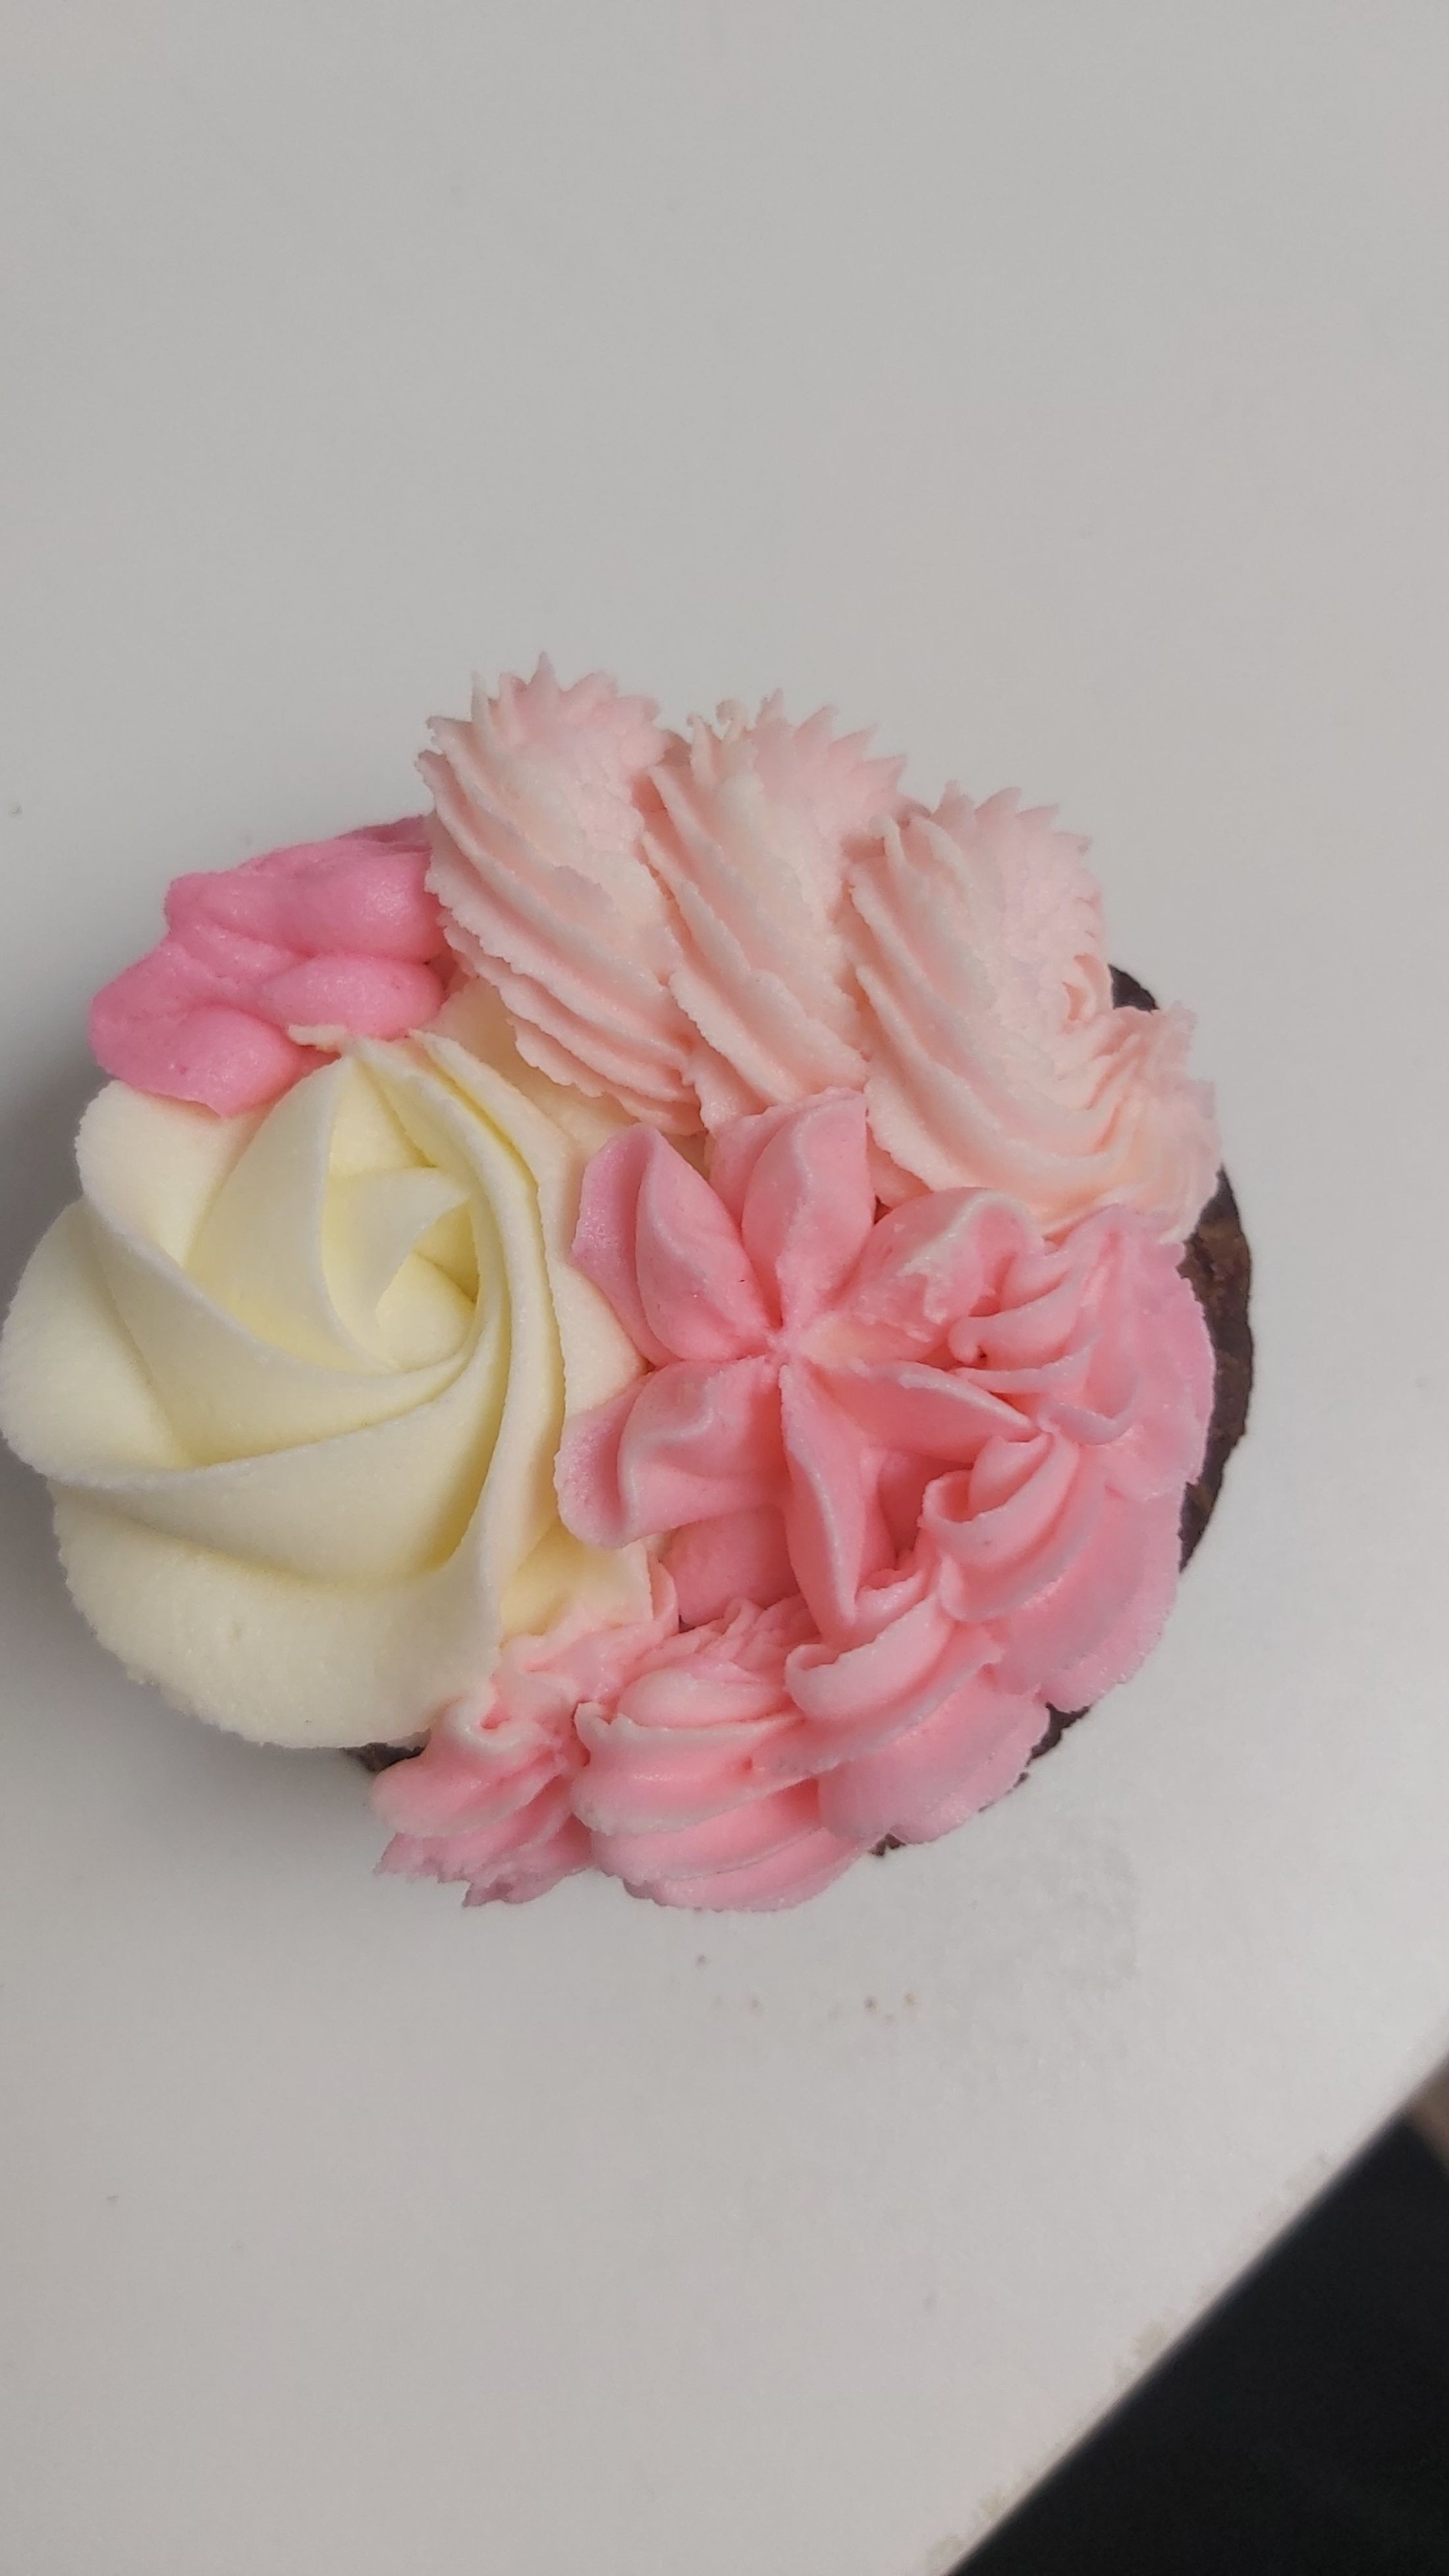 Cake Decorating - Piped Rose Cake